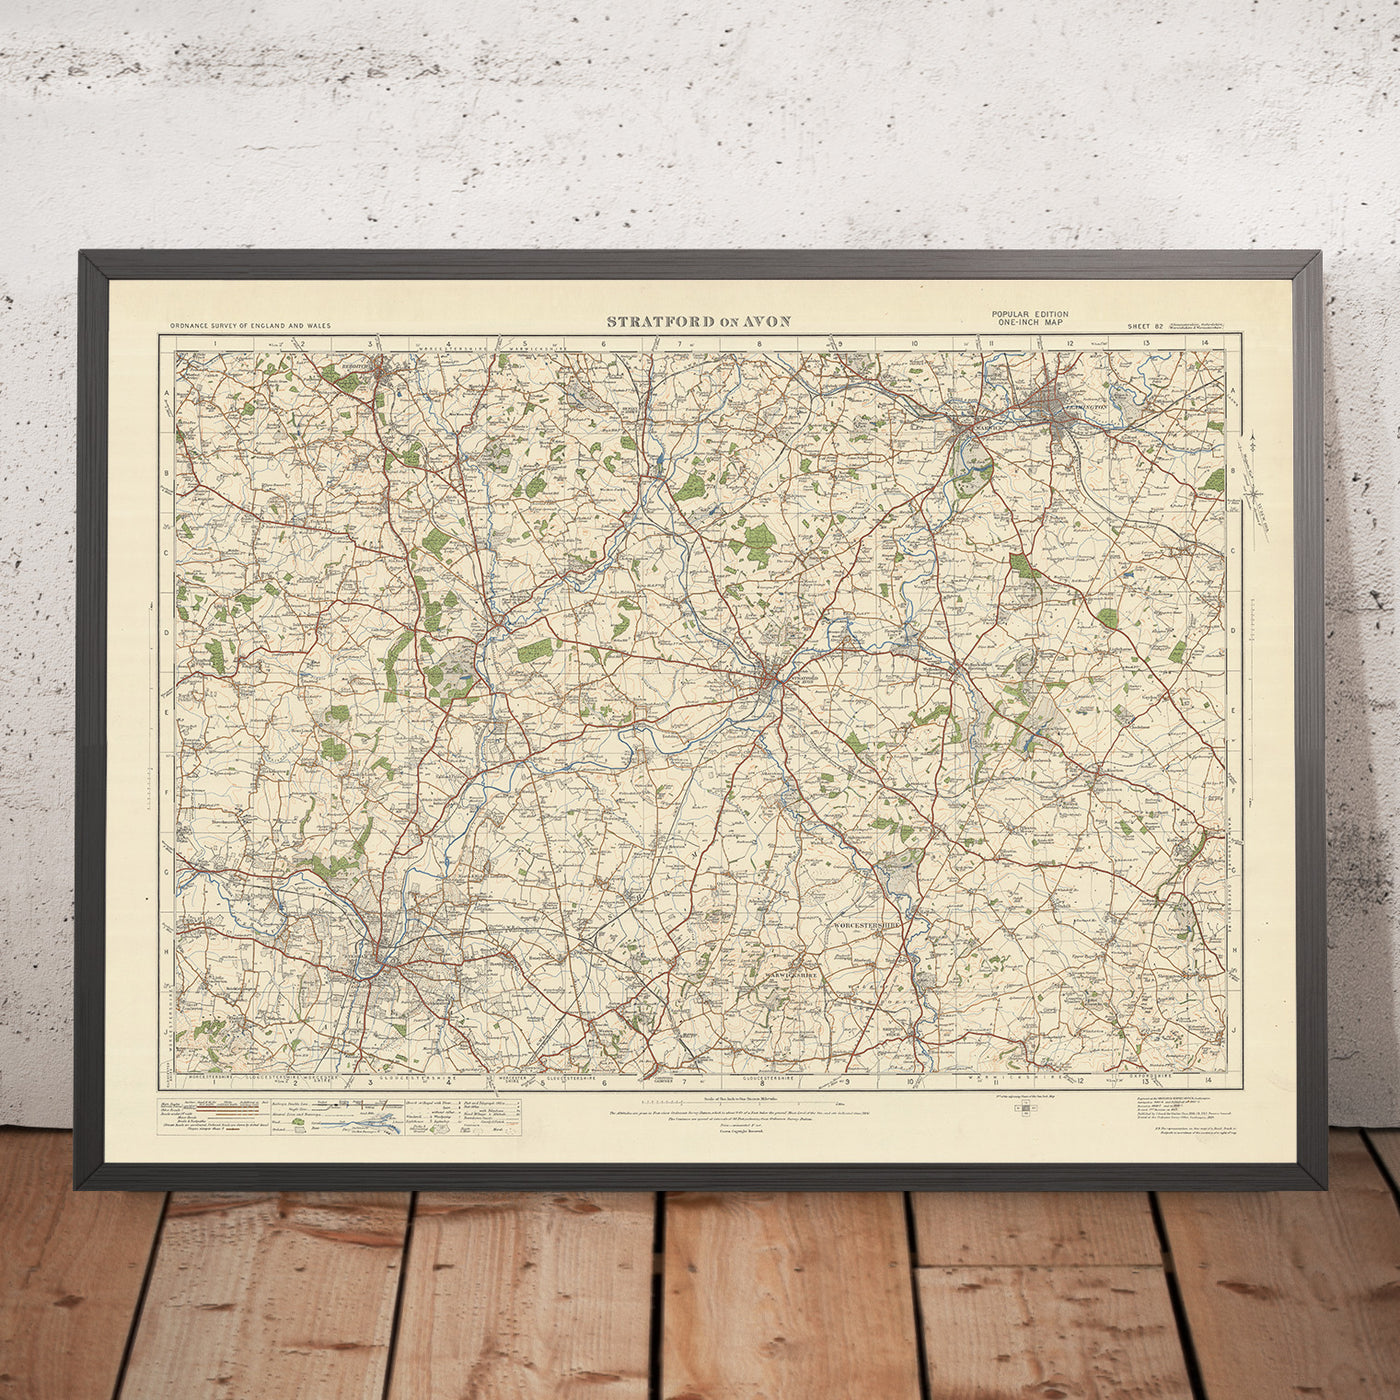 Old Ordnance Survey Map, Sheet 82 - Stratford on Avon, 1925: Warwick, Royal Leamington Spa, Redditch, Evesham, Alcester